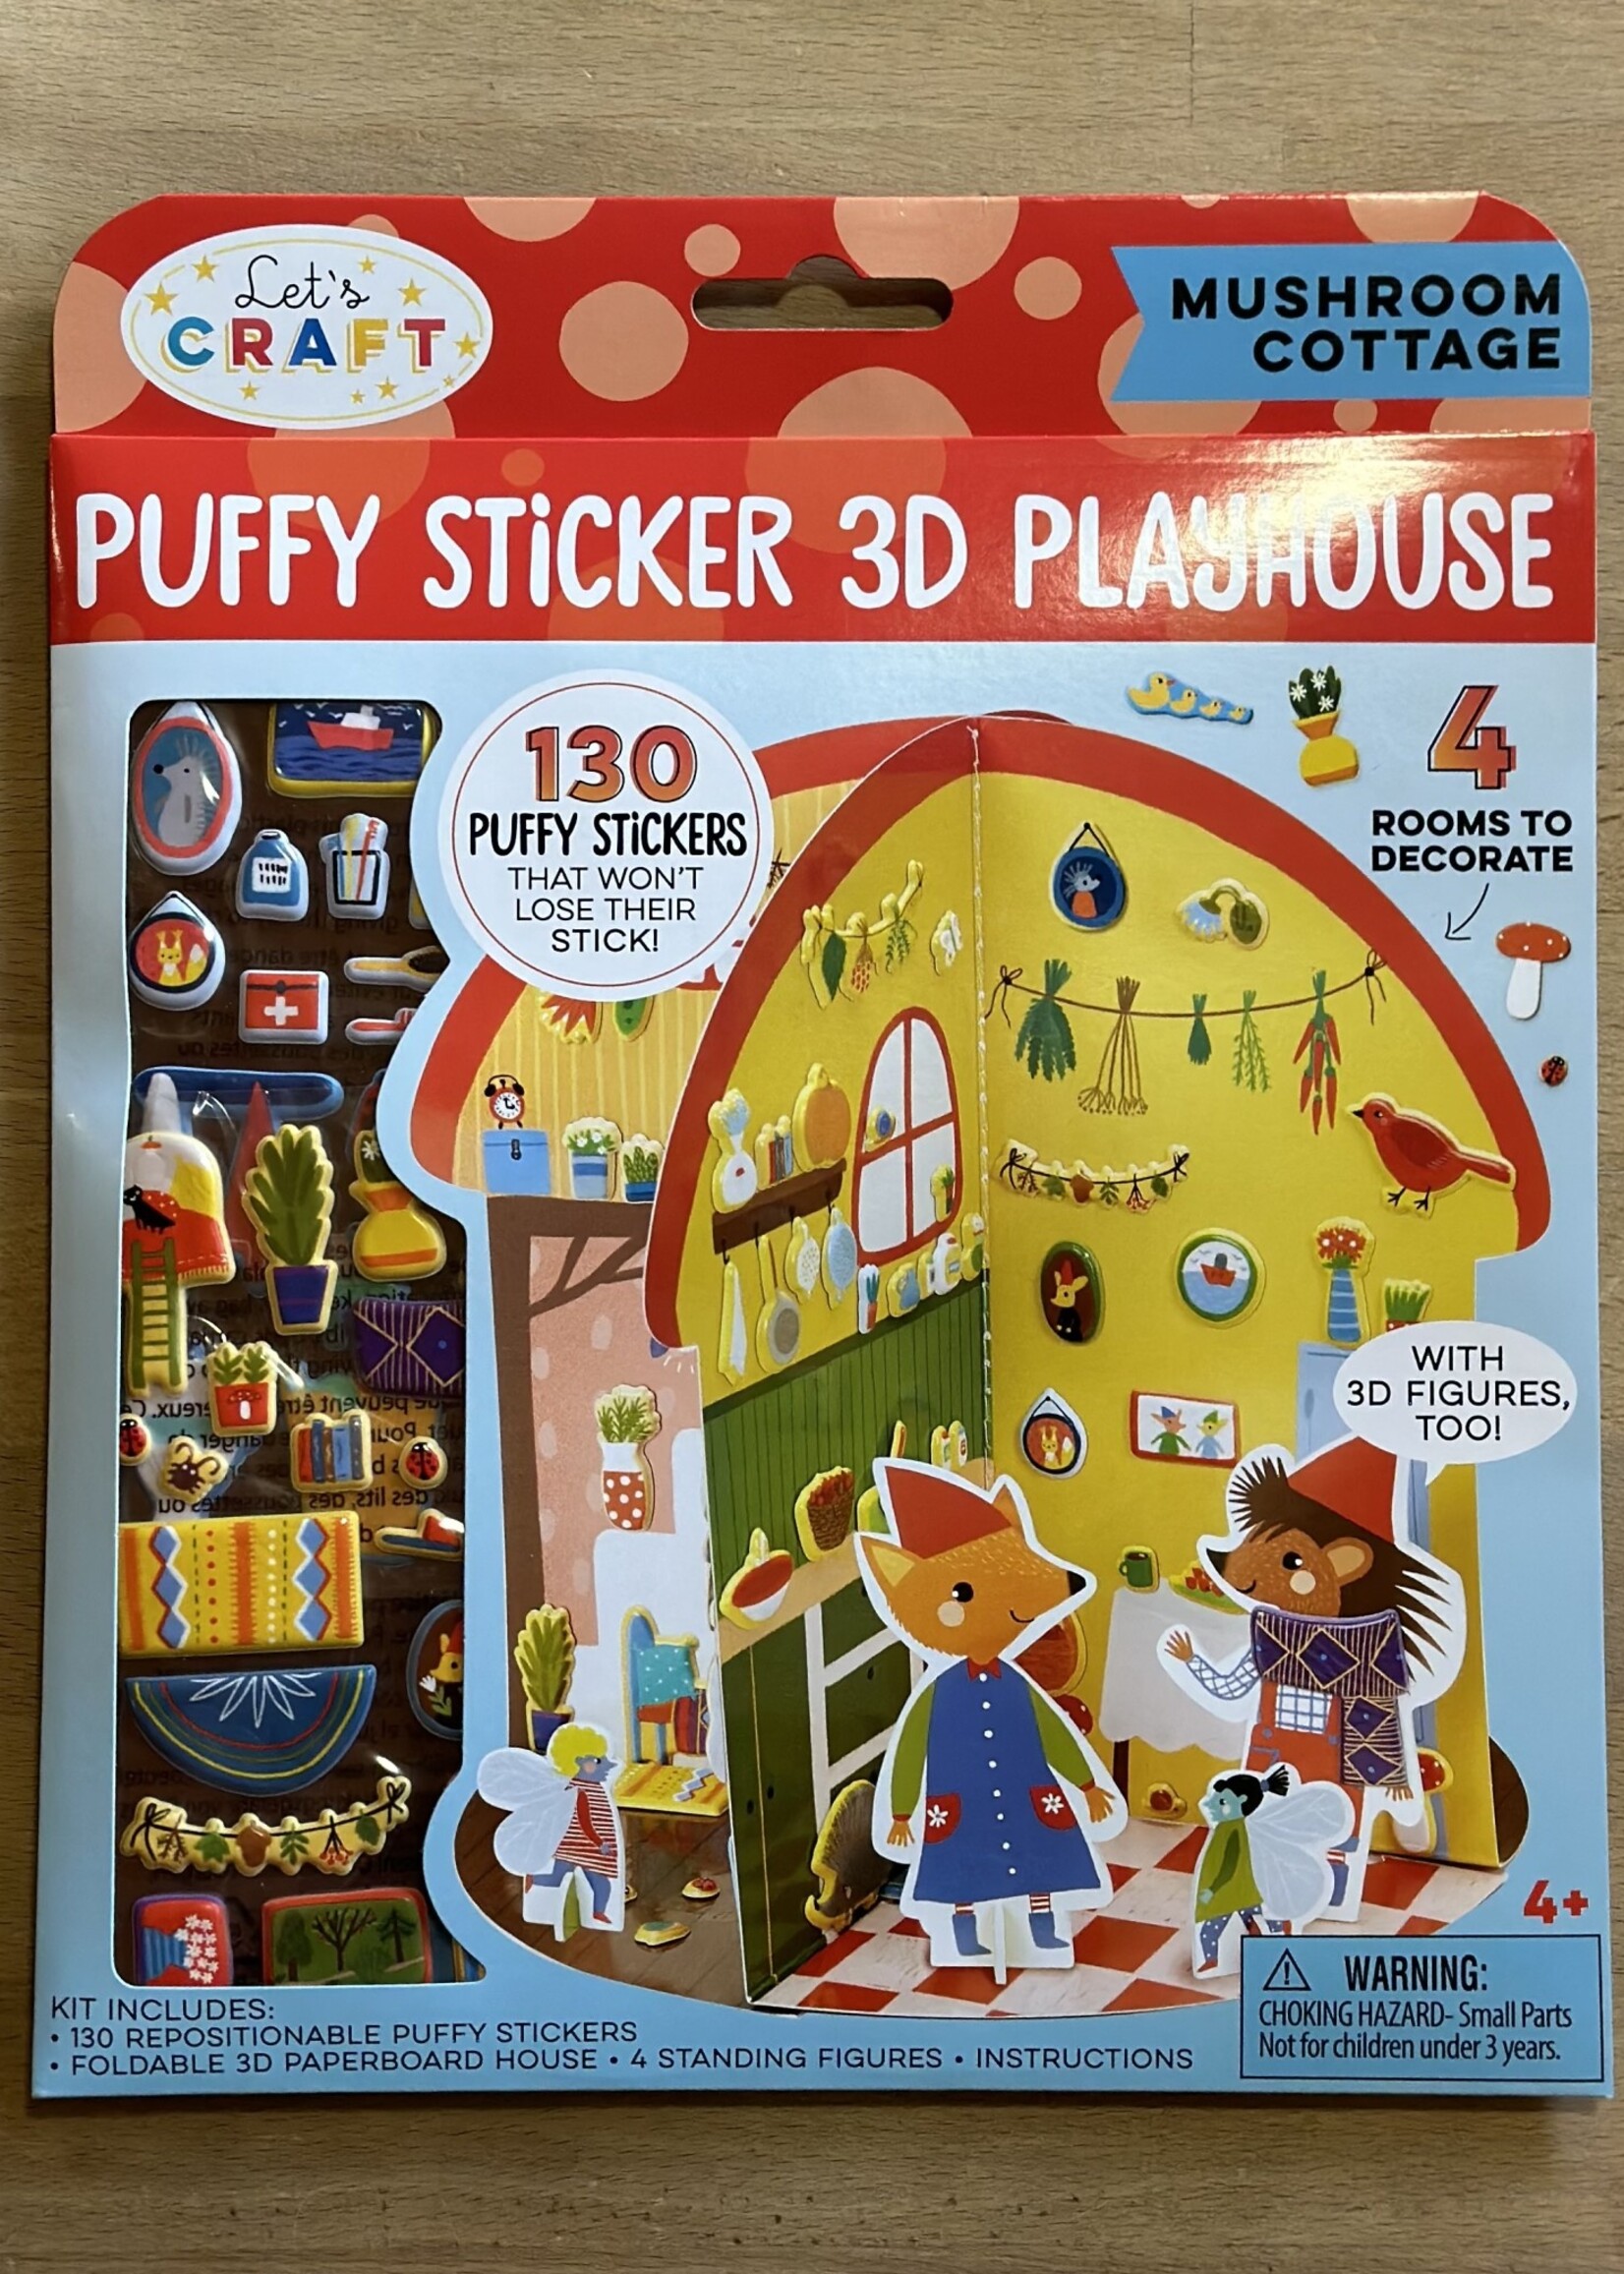 Puffy Sticker 3D Playhouse - Mushroom Cottage